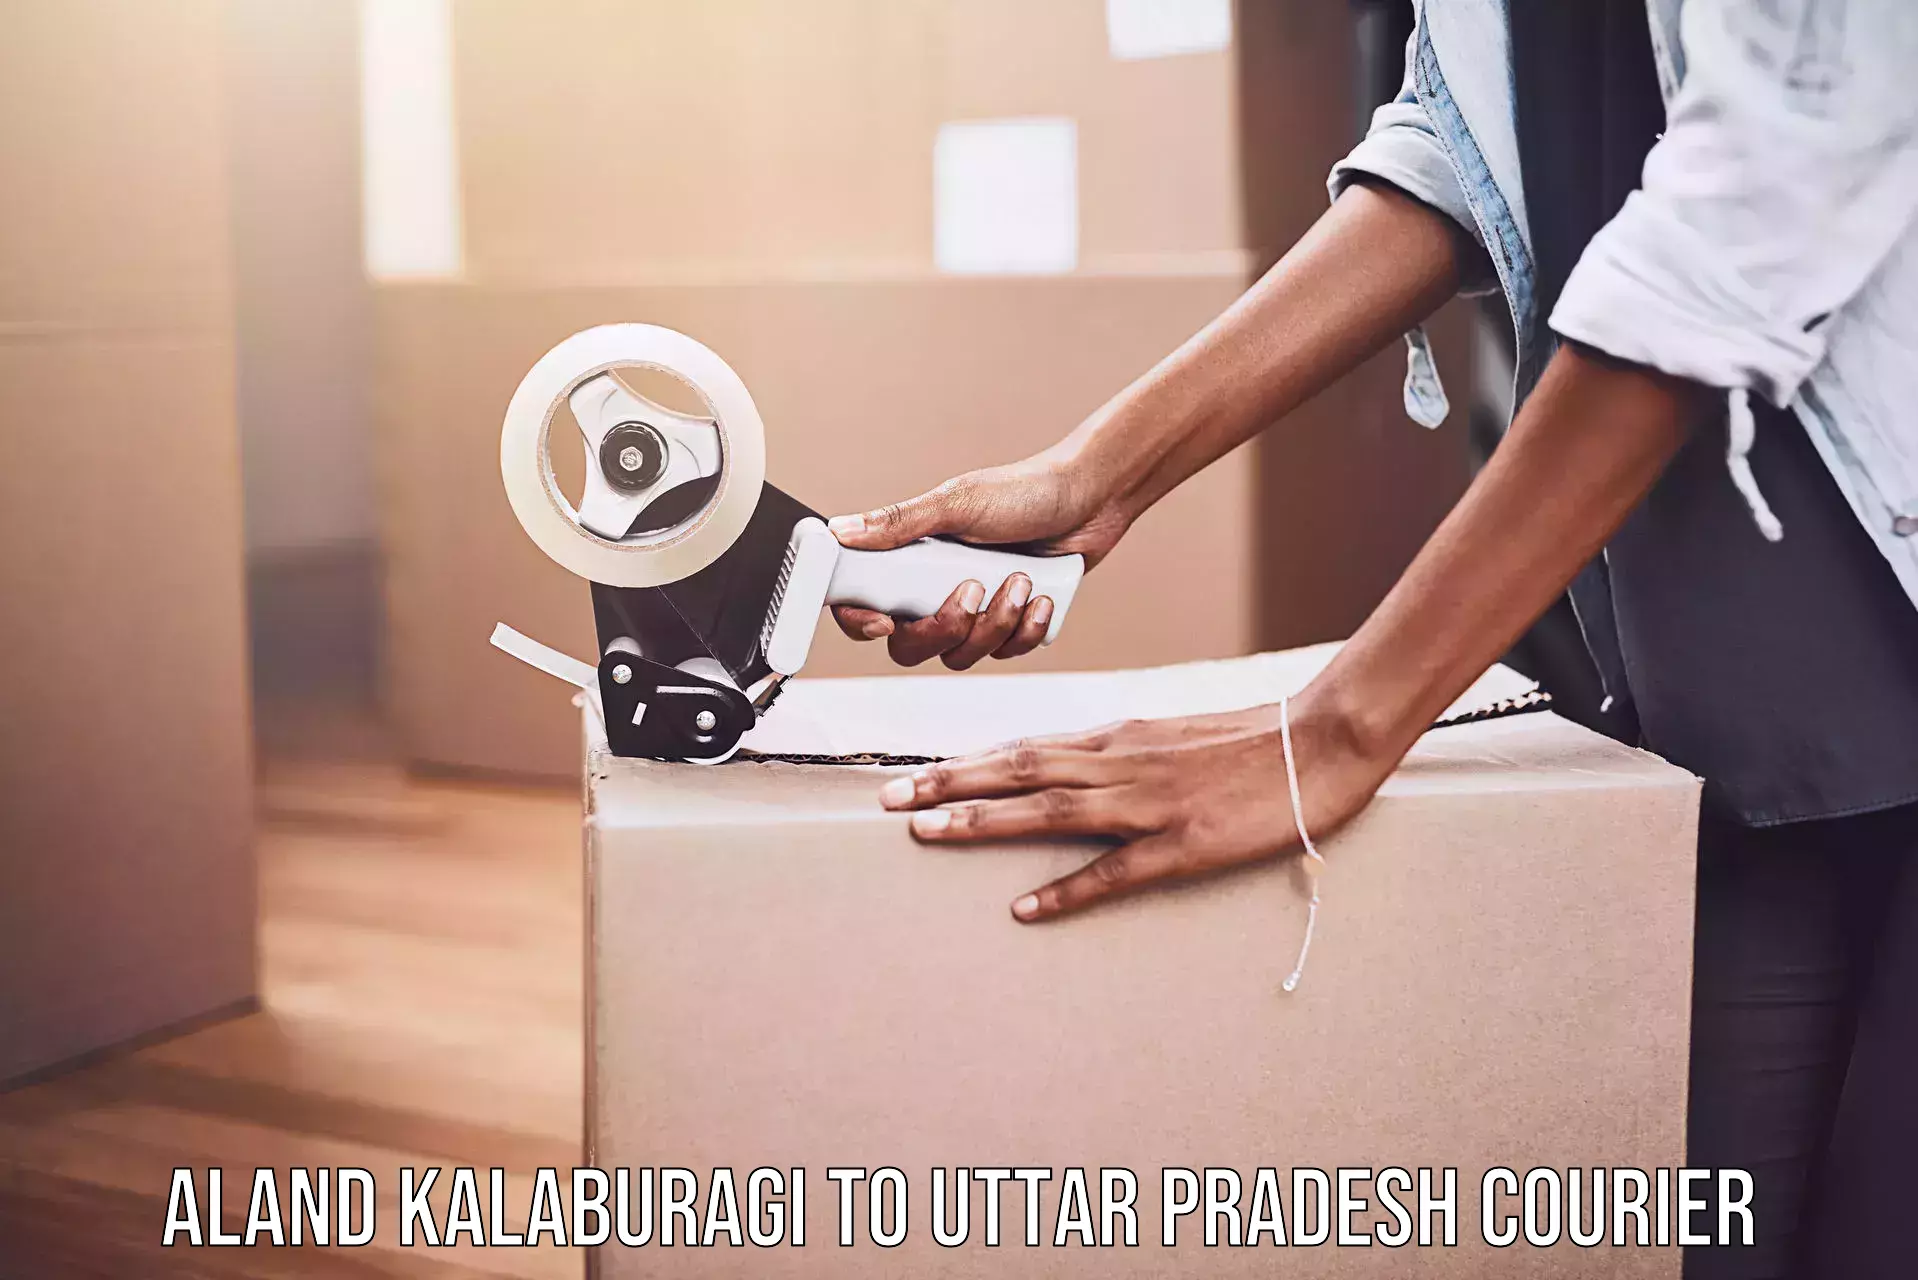 User-friendly delivery service Aland Kalaburagi to Kurebhar